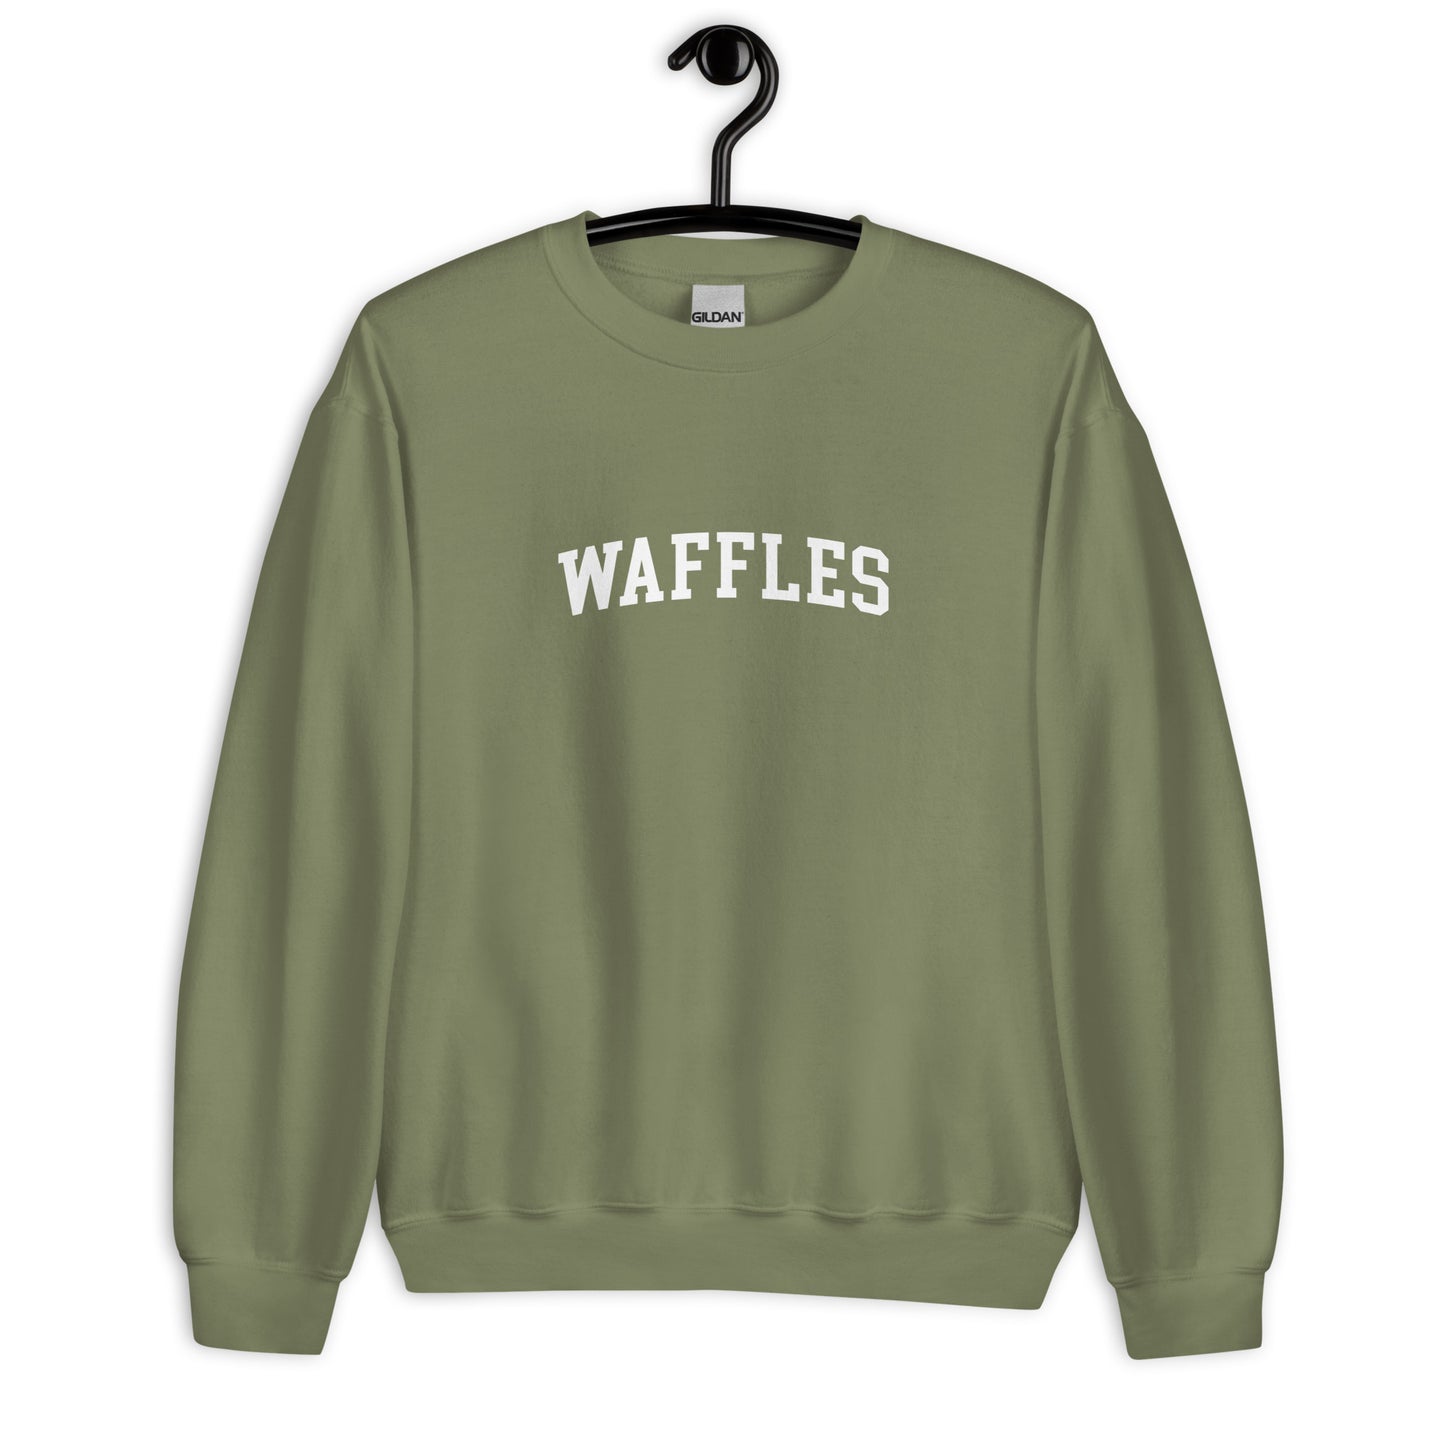 Waffles Sweatshirt - Arched Font